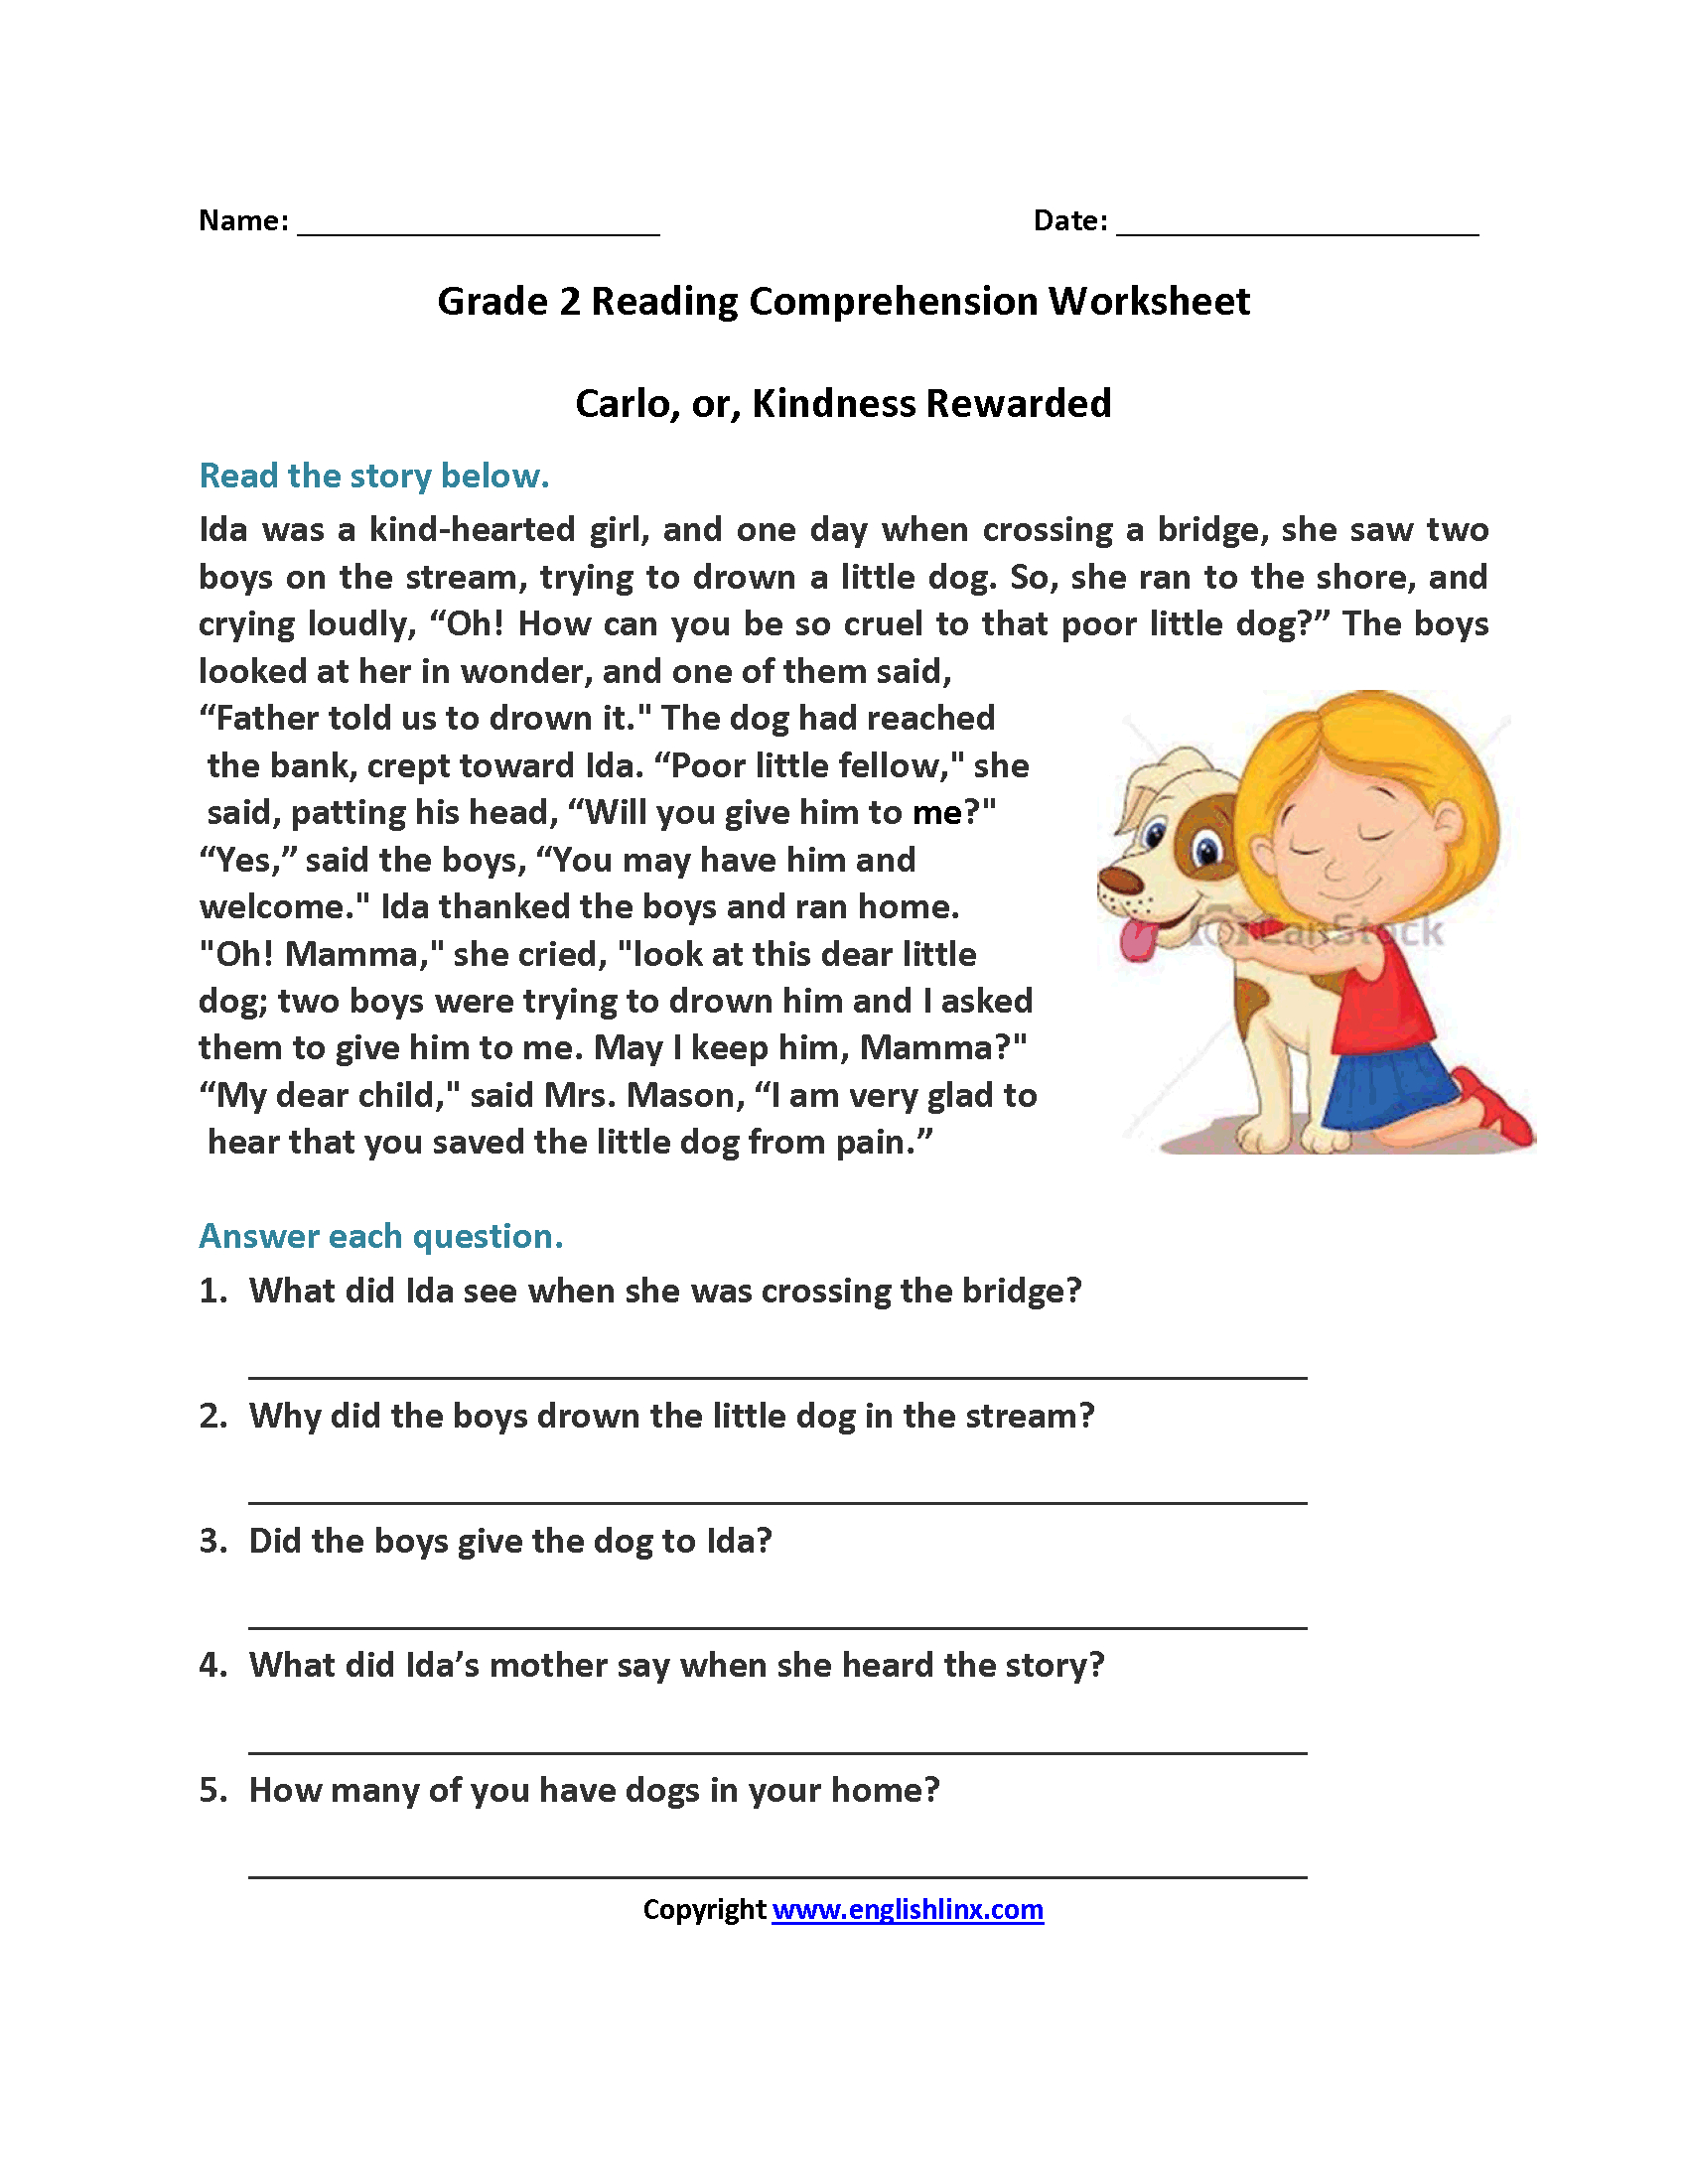 Carlo Or Kindness Rewarded Second Grade Reading Worksheets | Reading | Third Grade Reading Worksheets Free Printable